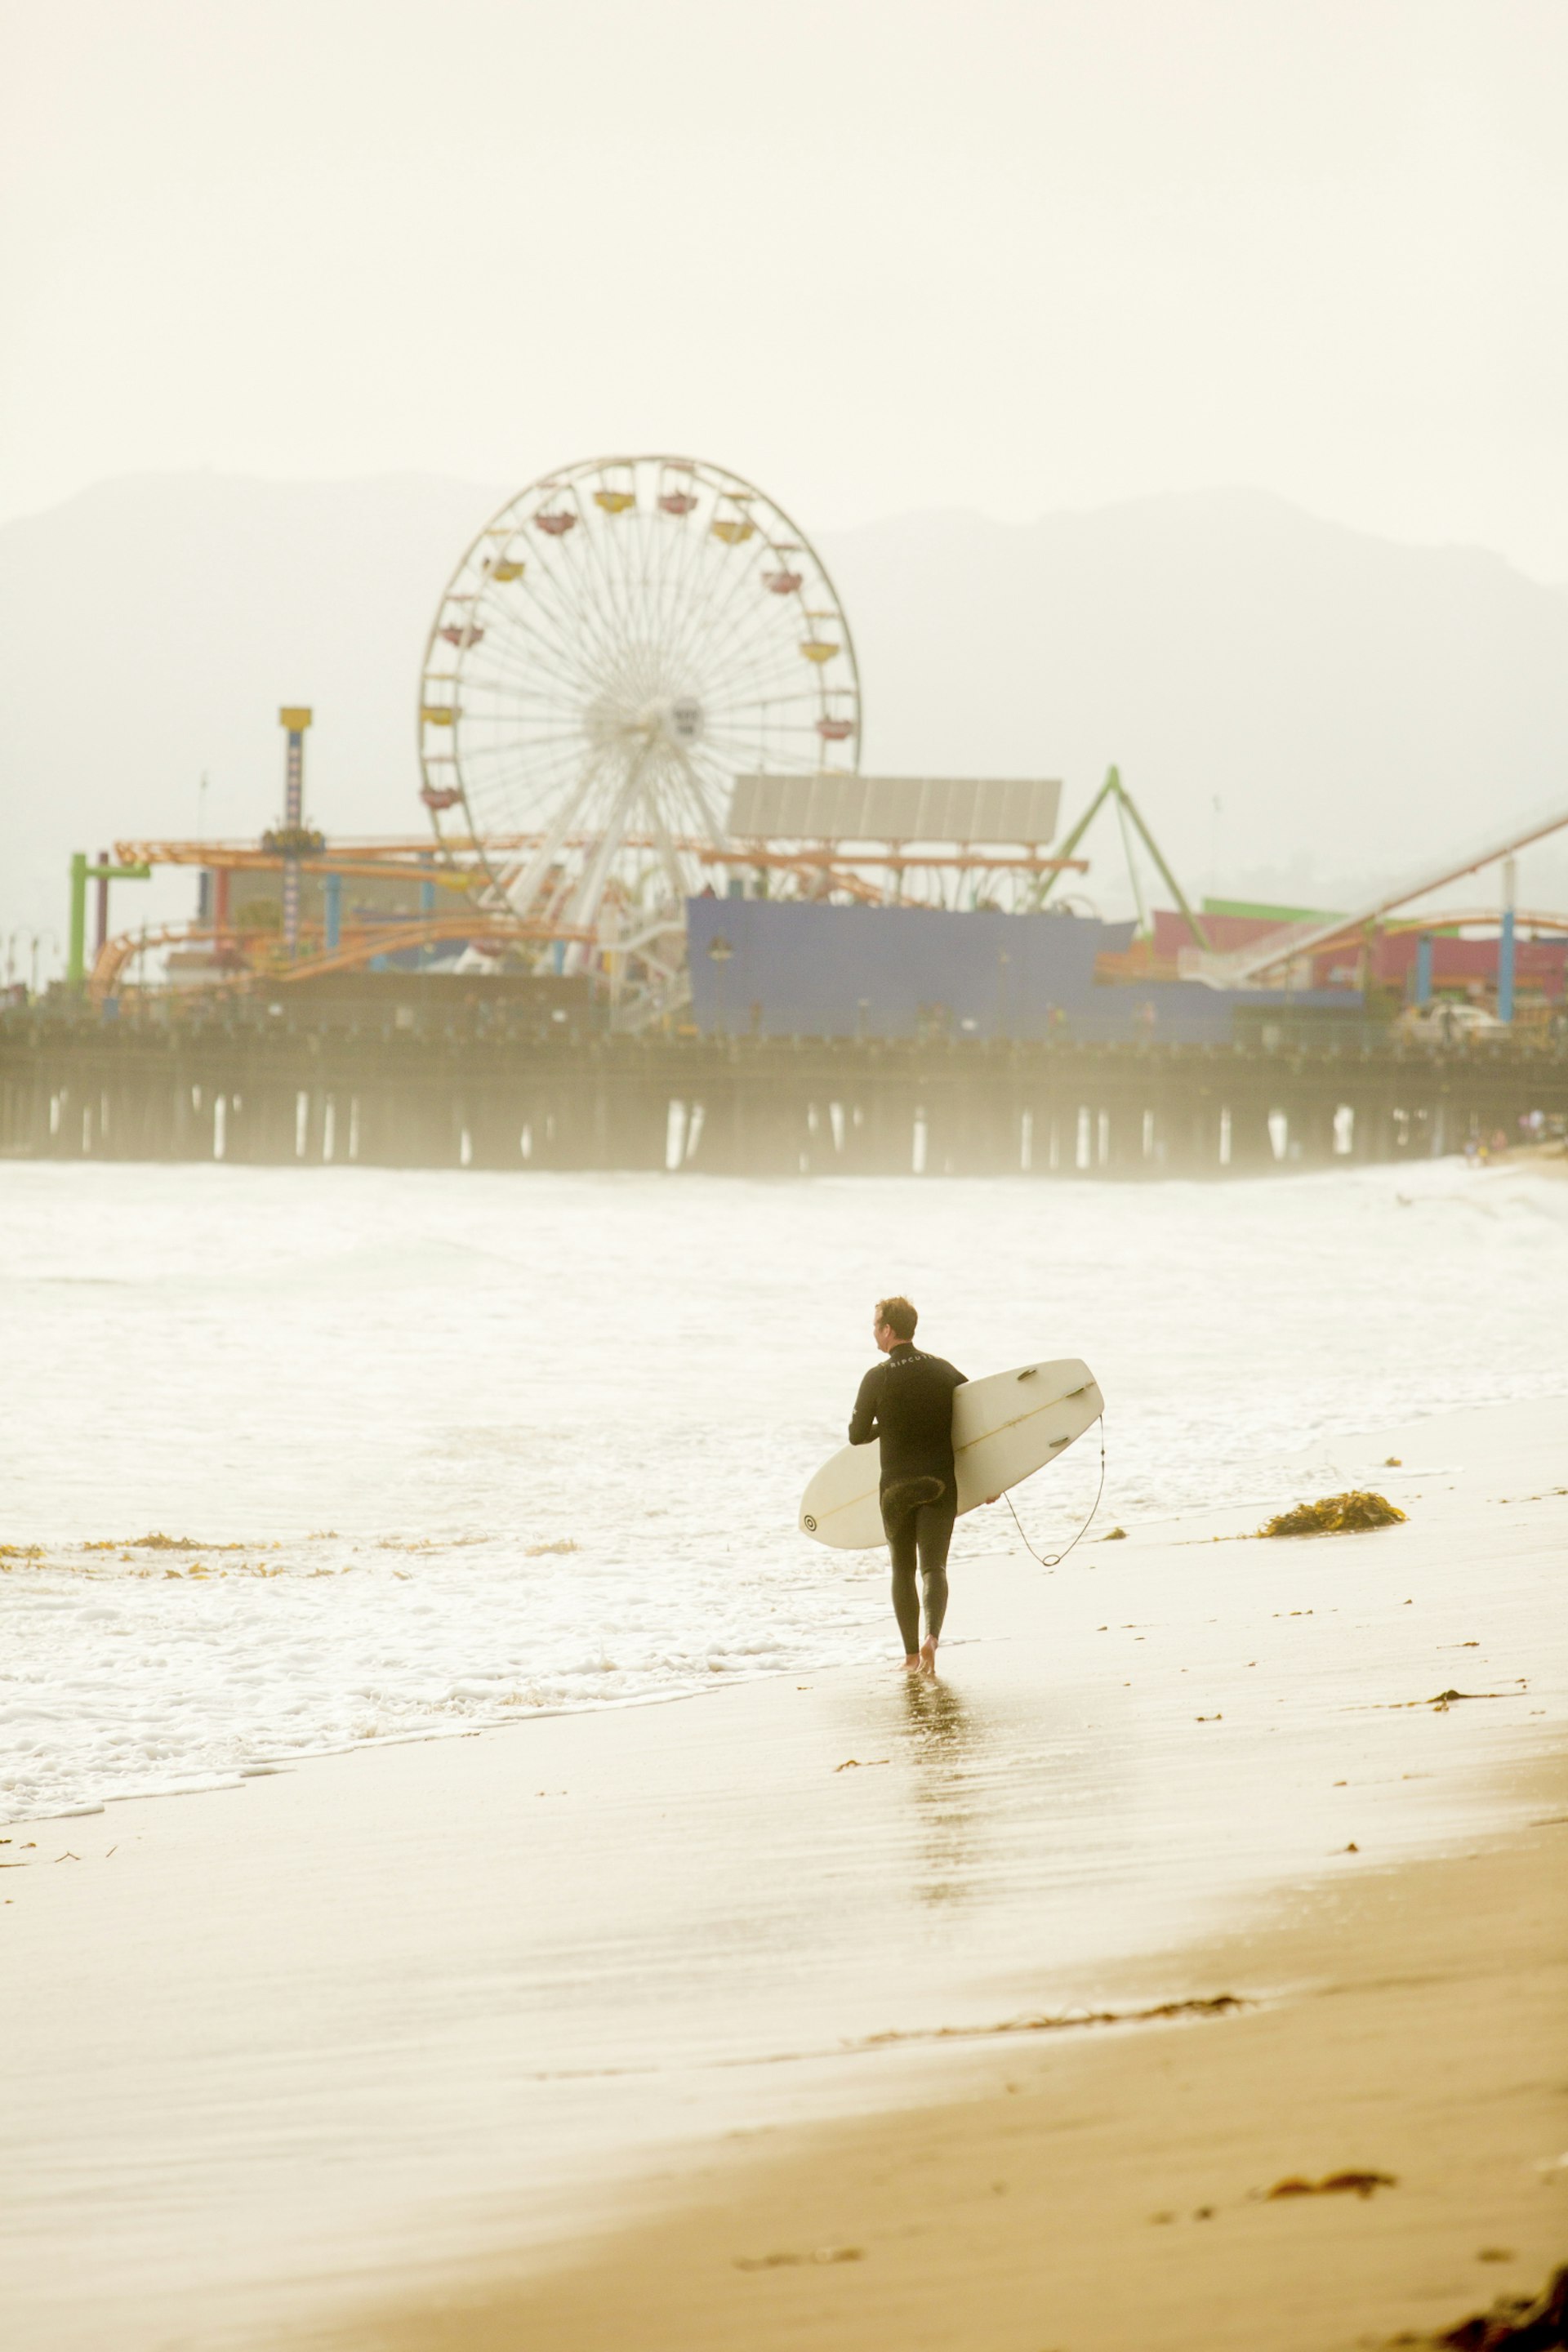 Surfer in Santa Monica, California by the Santa Monica pier.